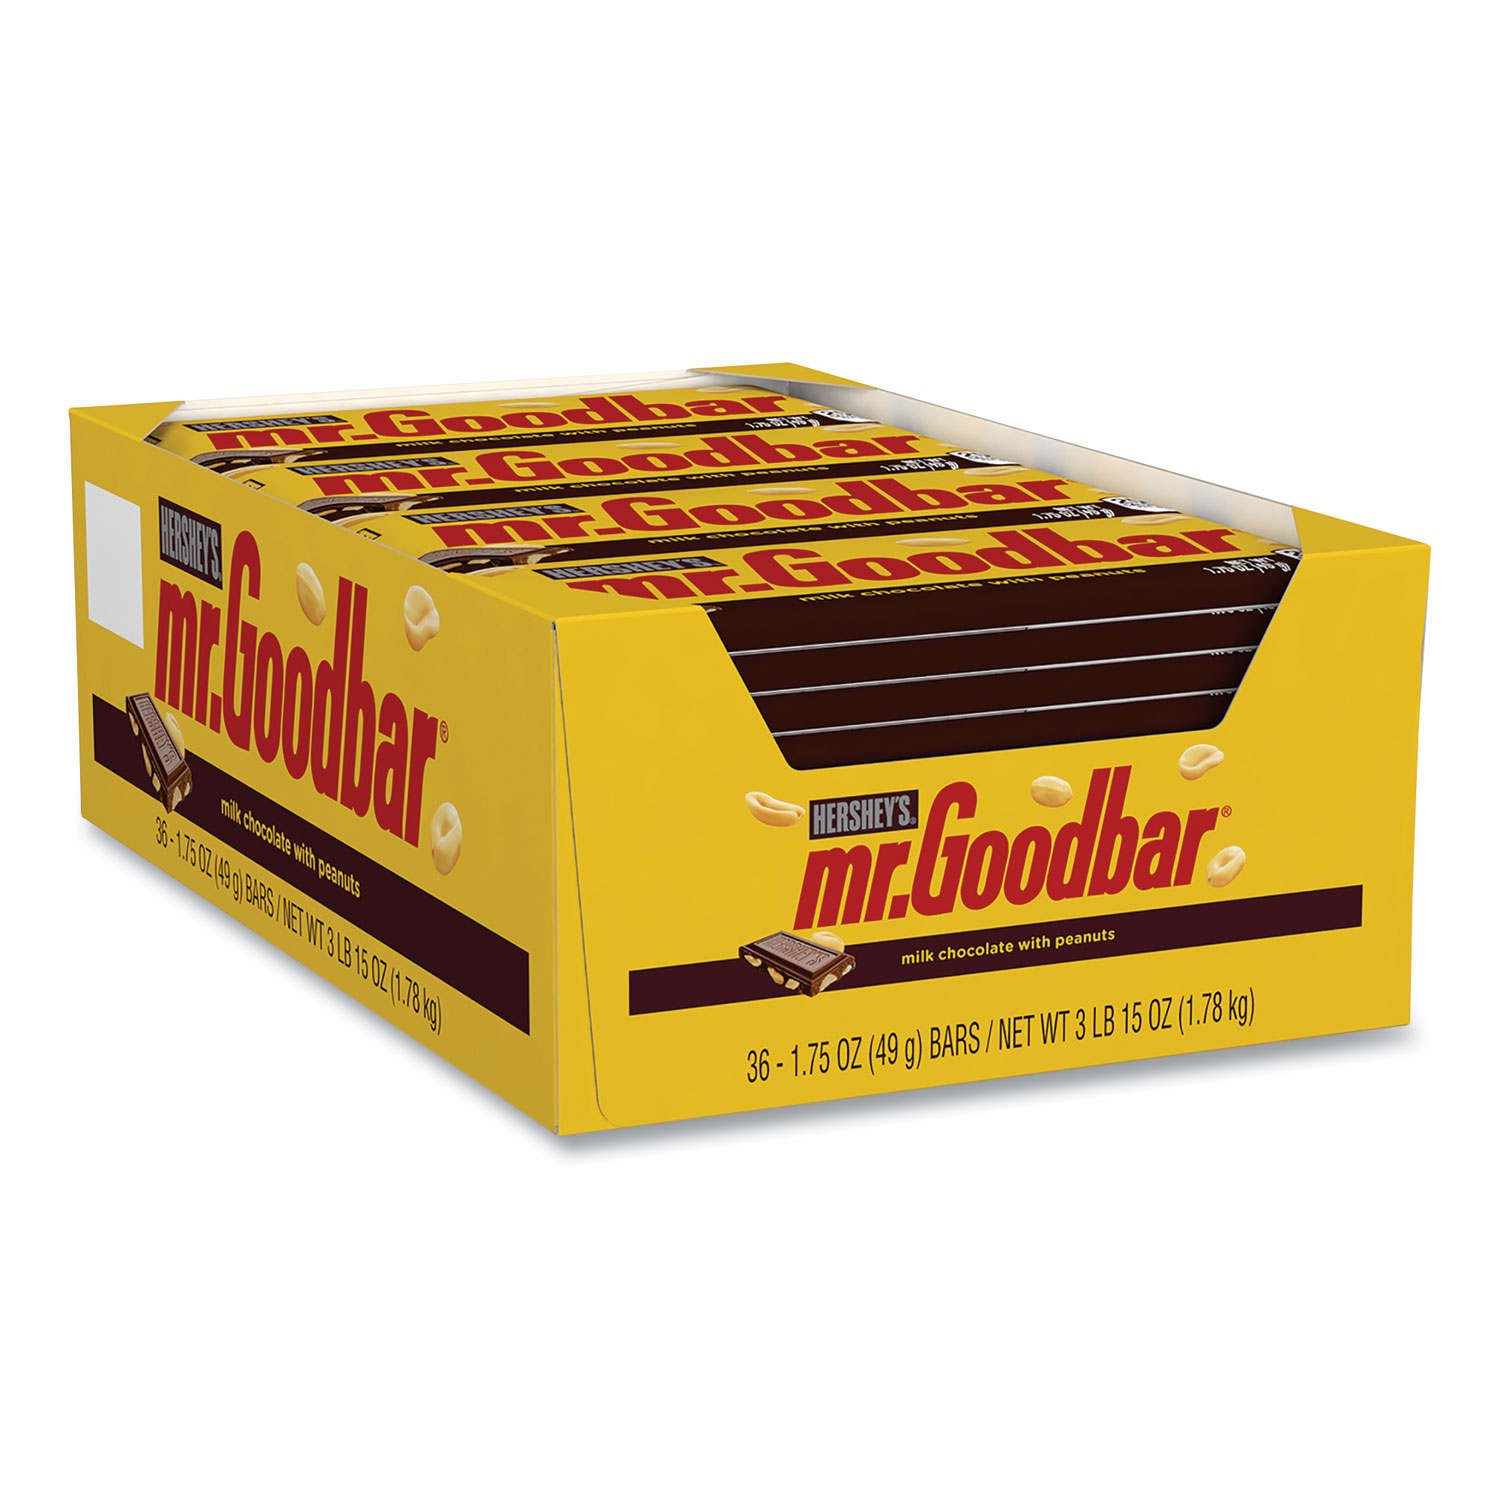  MR. GOODBAR 24300 Chocolate Candy Bar, 1.75 oz Bar, 36 Bars/Box, Free Delivery in 1-4 Business Days (GRR24600185) 